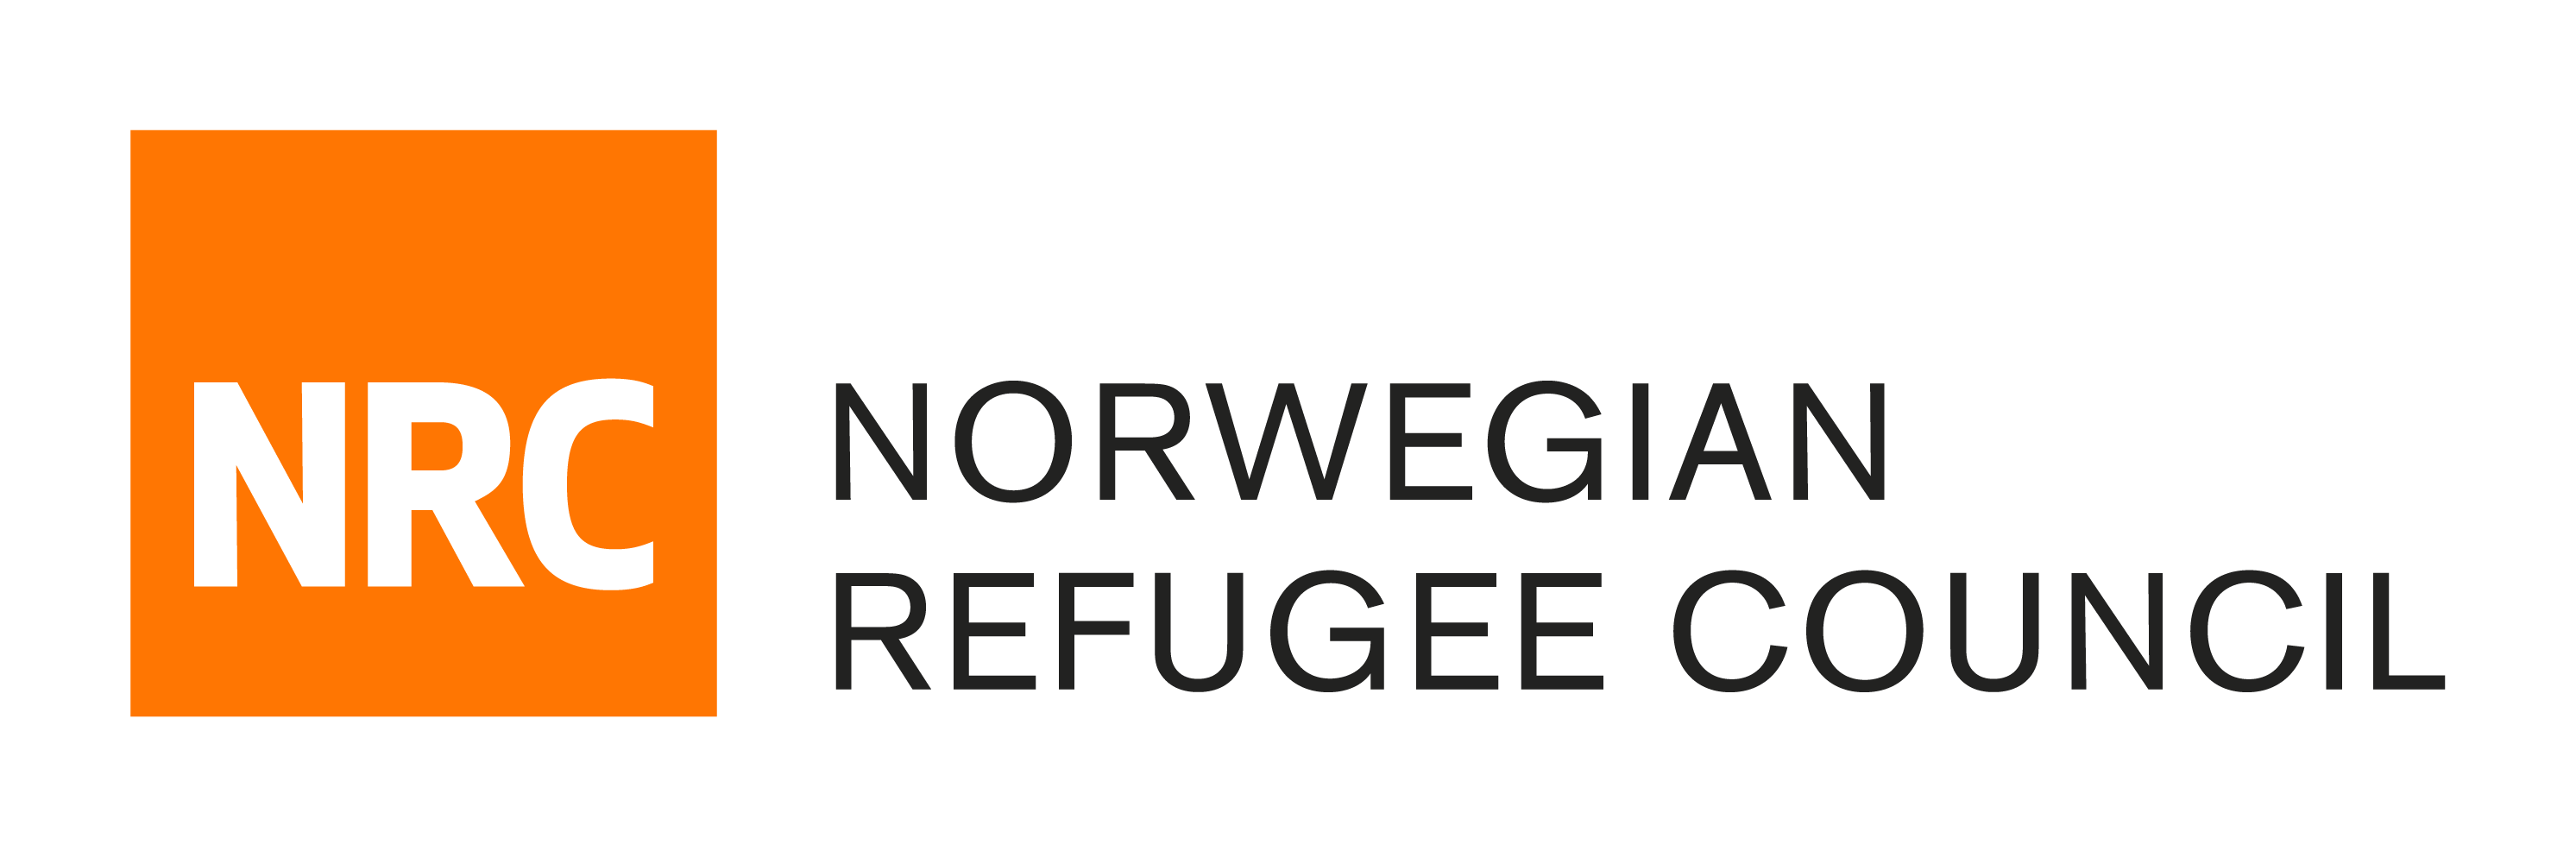 The Norwegian Refugee Council USA